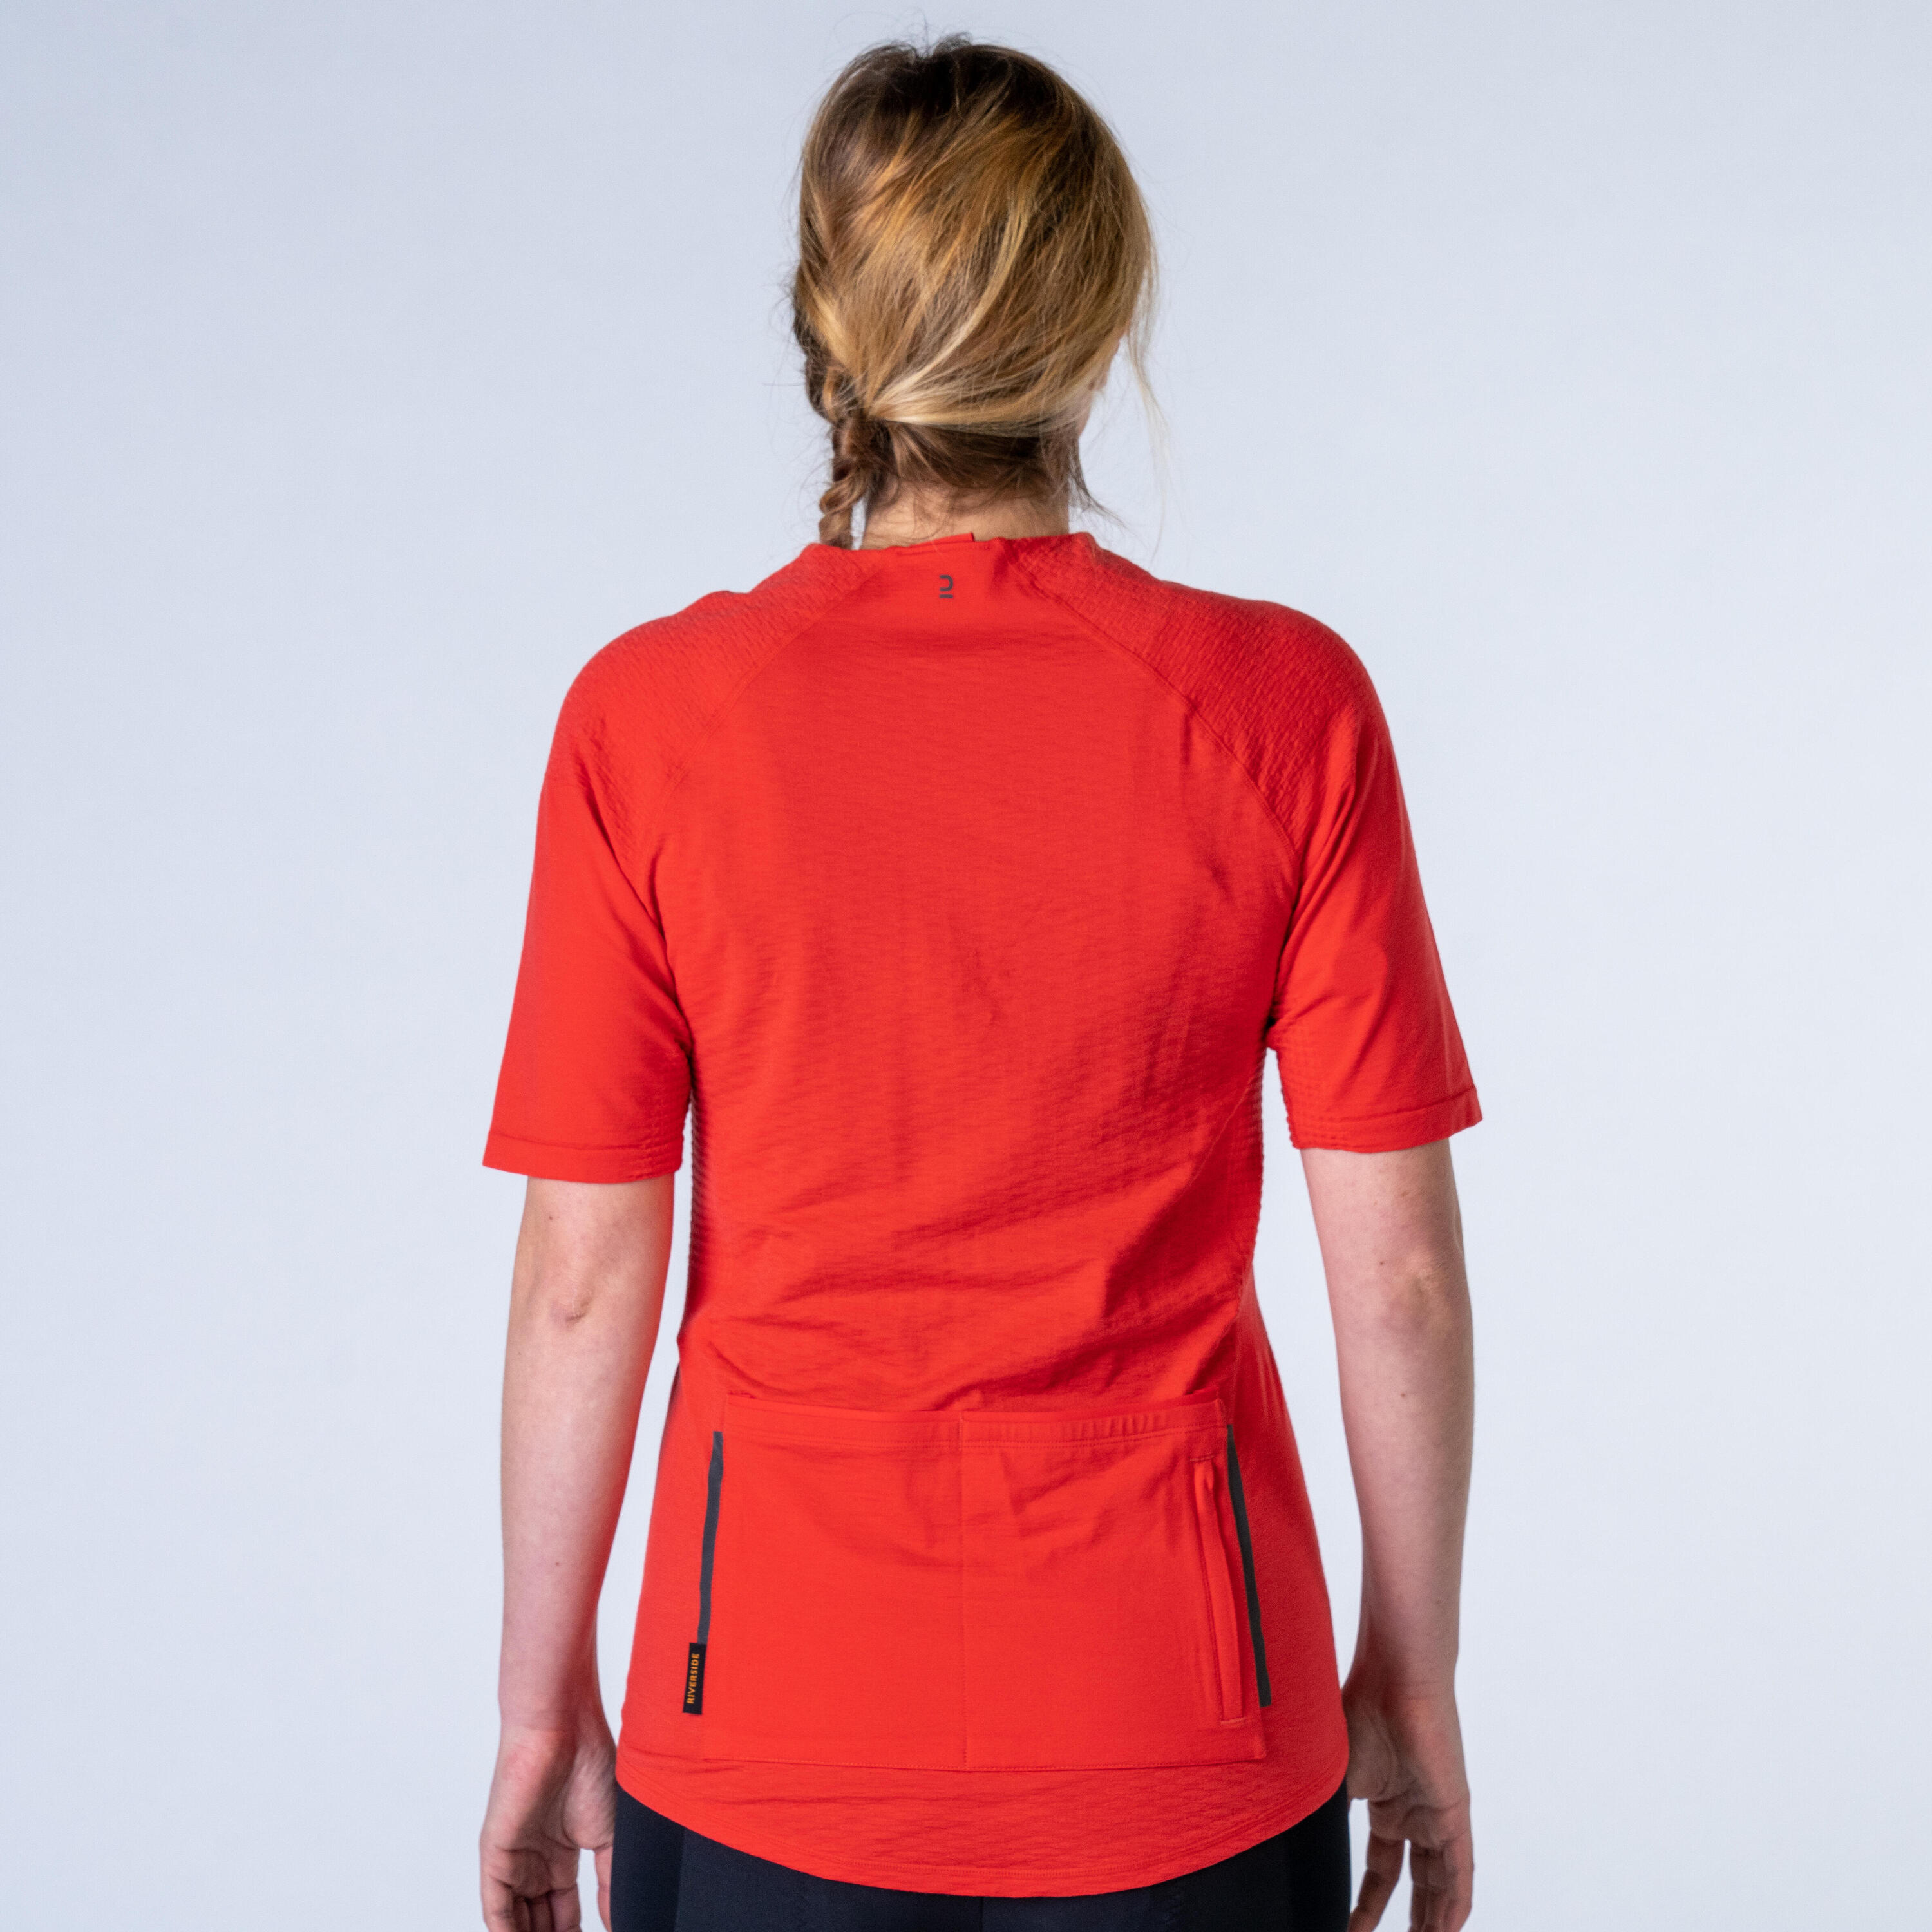 Women's Short-Sleeved Cycling Jersey GRVL900 (48% Merino) - Red 3/10